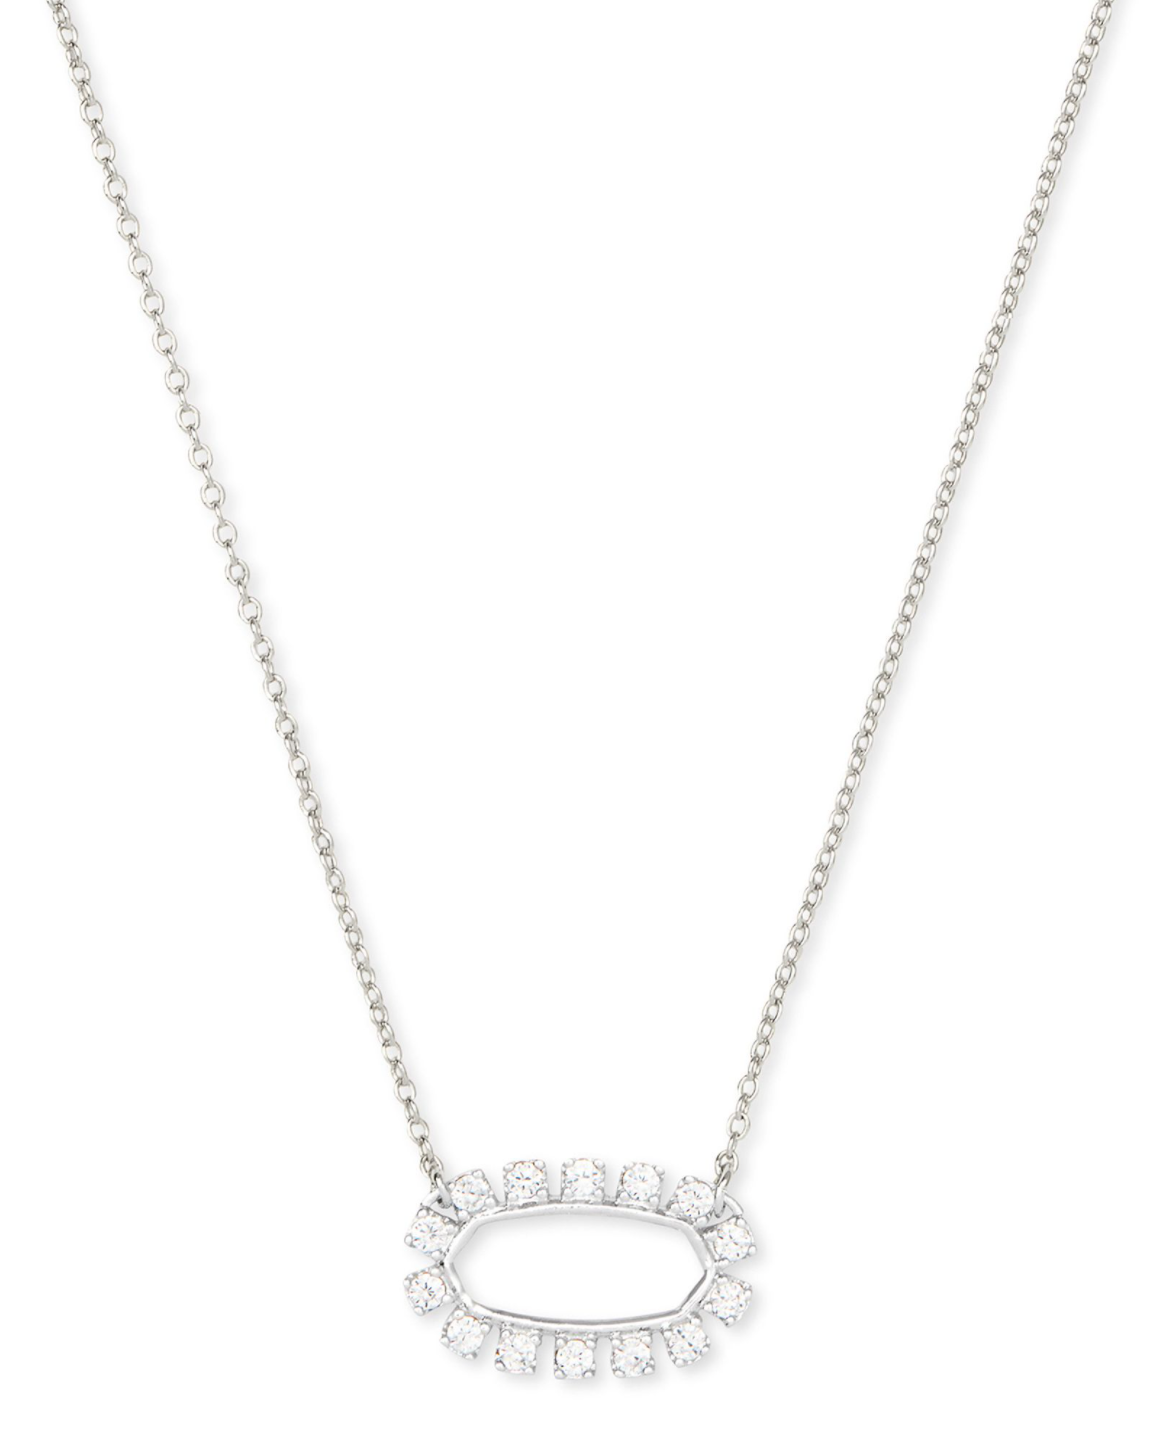 Kendra Scott Elisa Open Frame Necklace - Silver White Cubic Zirconia